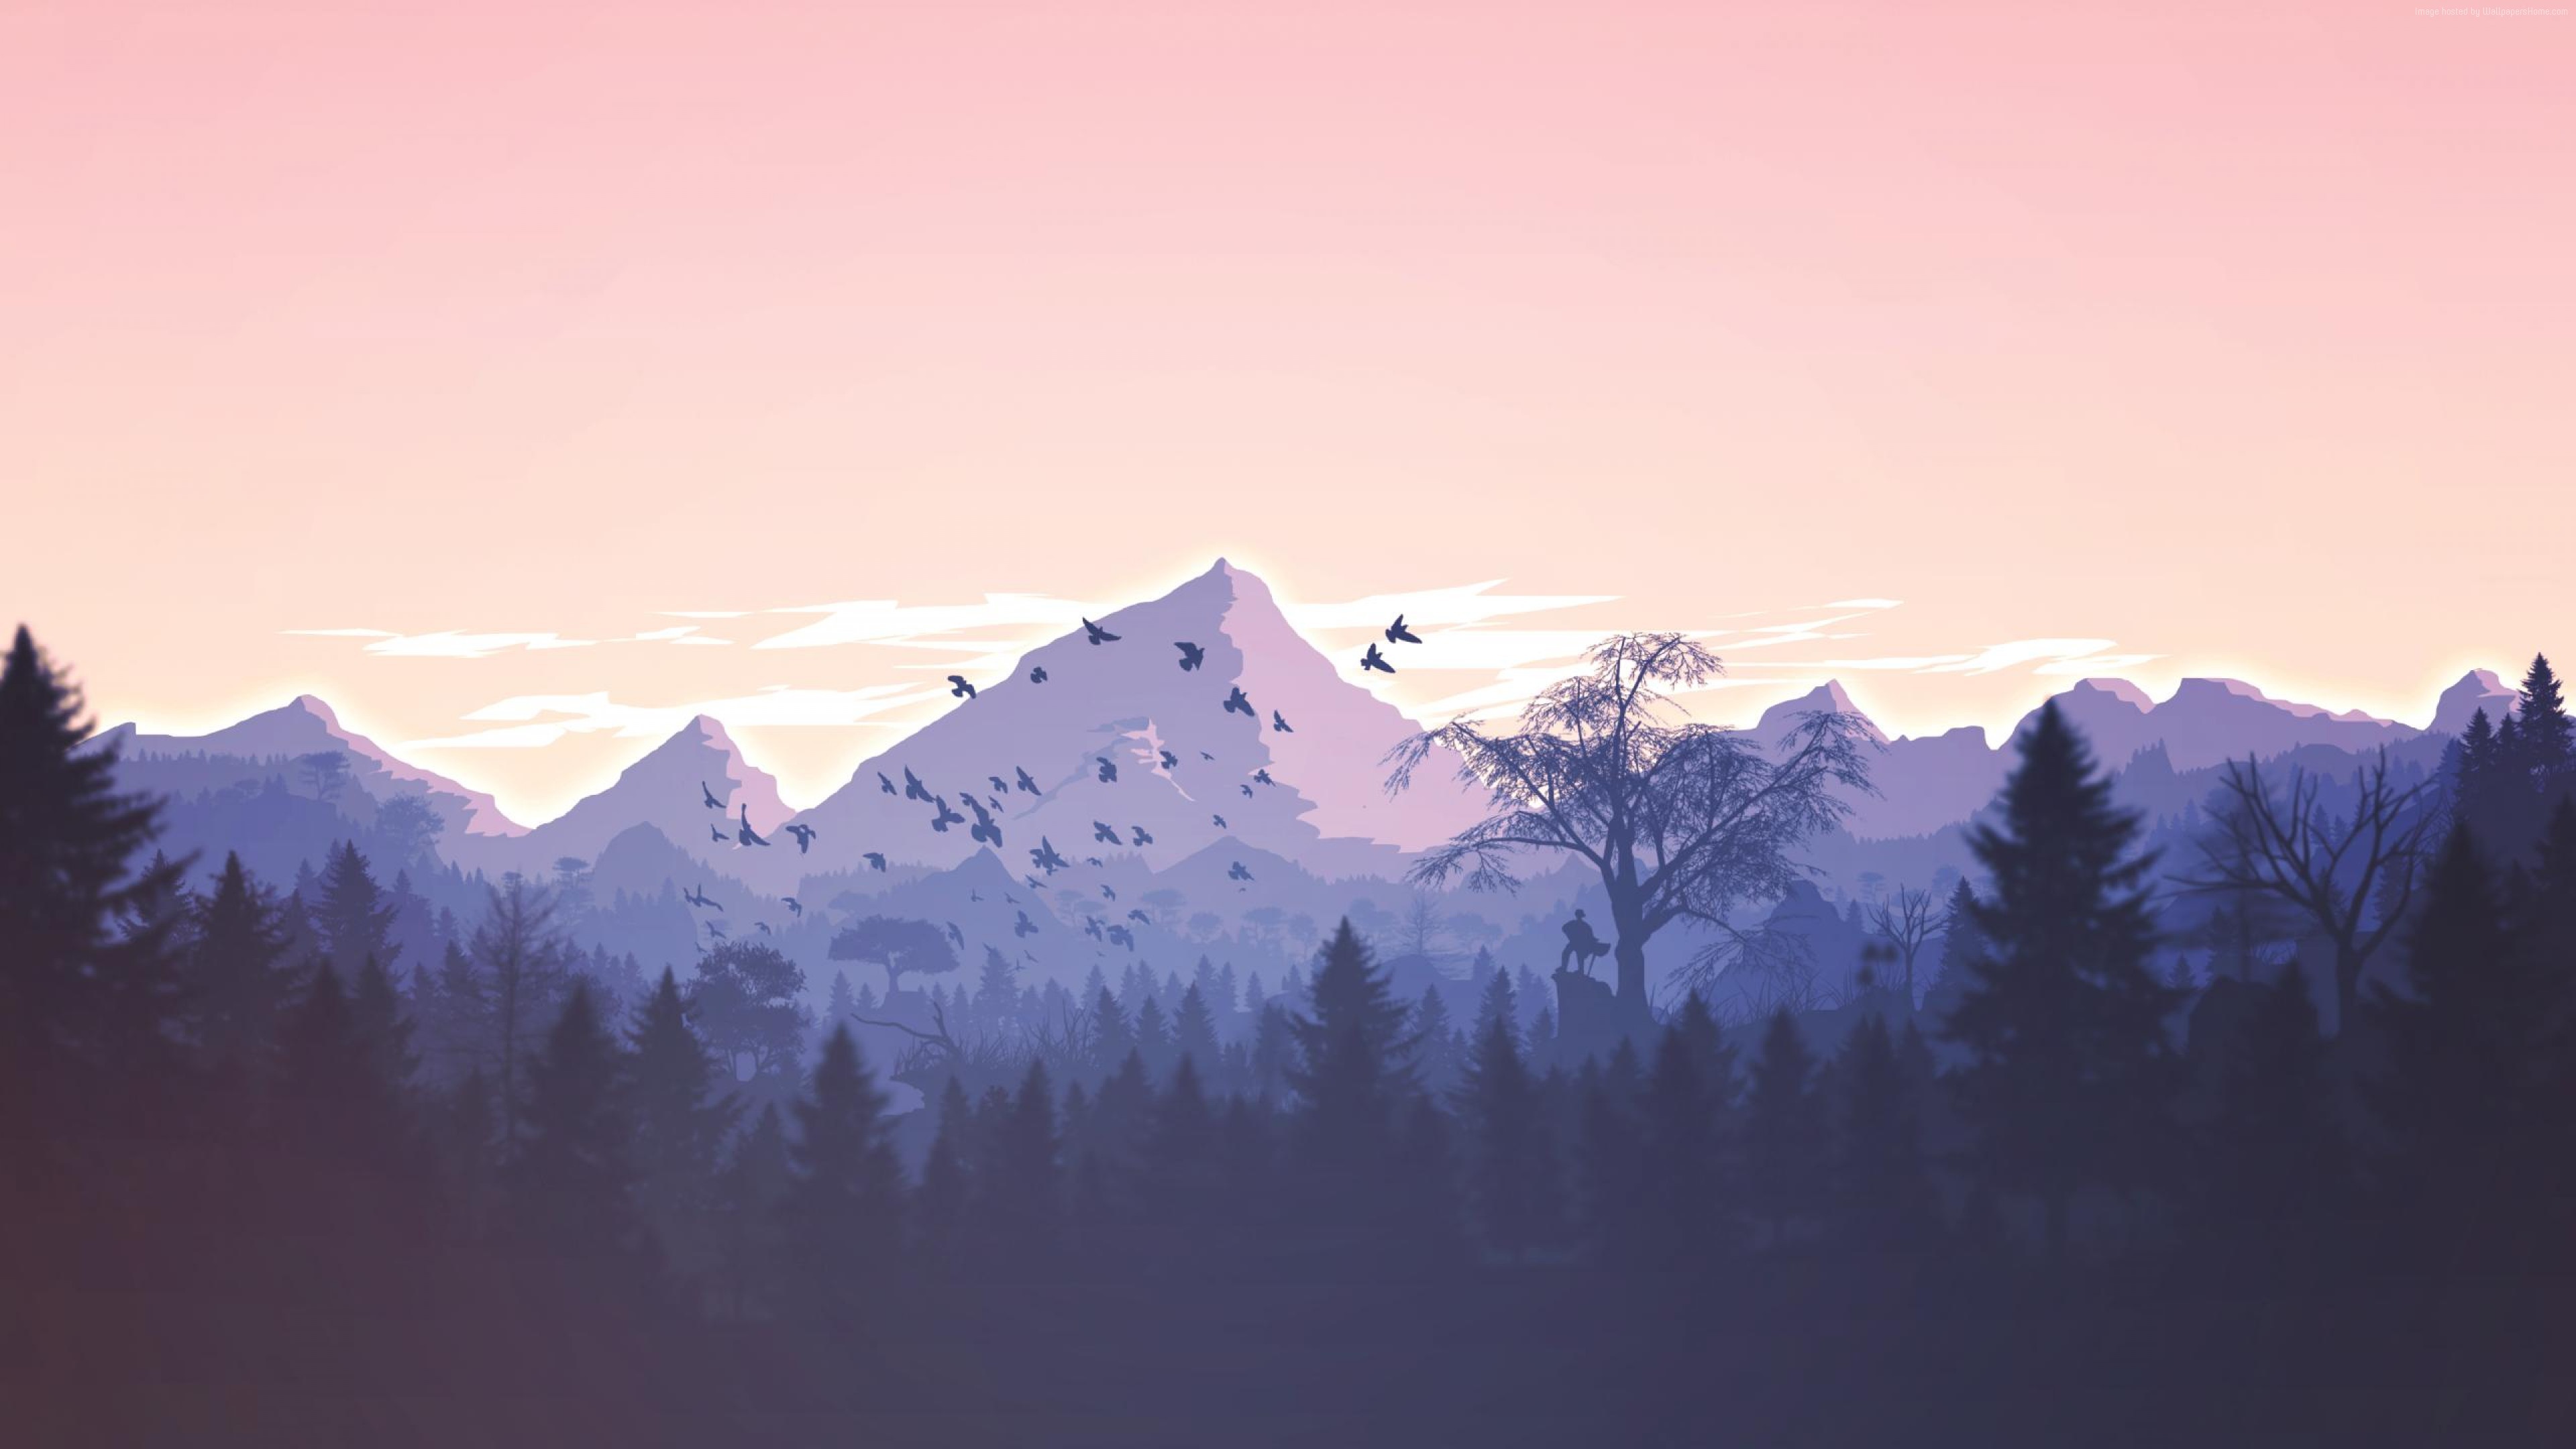 3840x2160, Wallpaper Forest, Mountains, Violet, Birds, - Mountain Wallpaper 4k - HD Wallpaper 